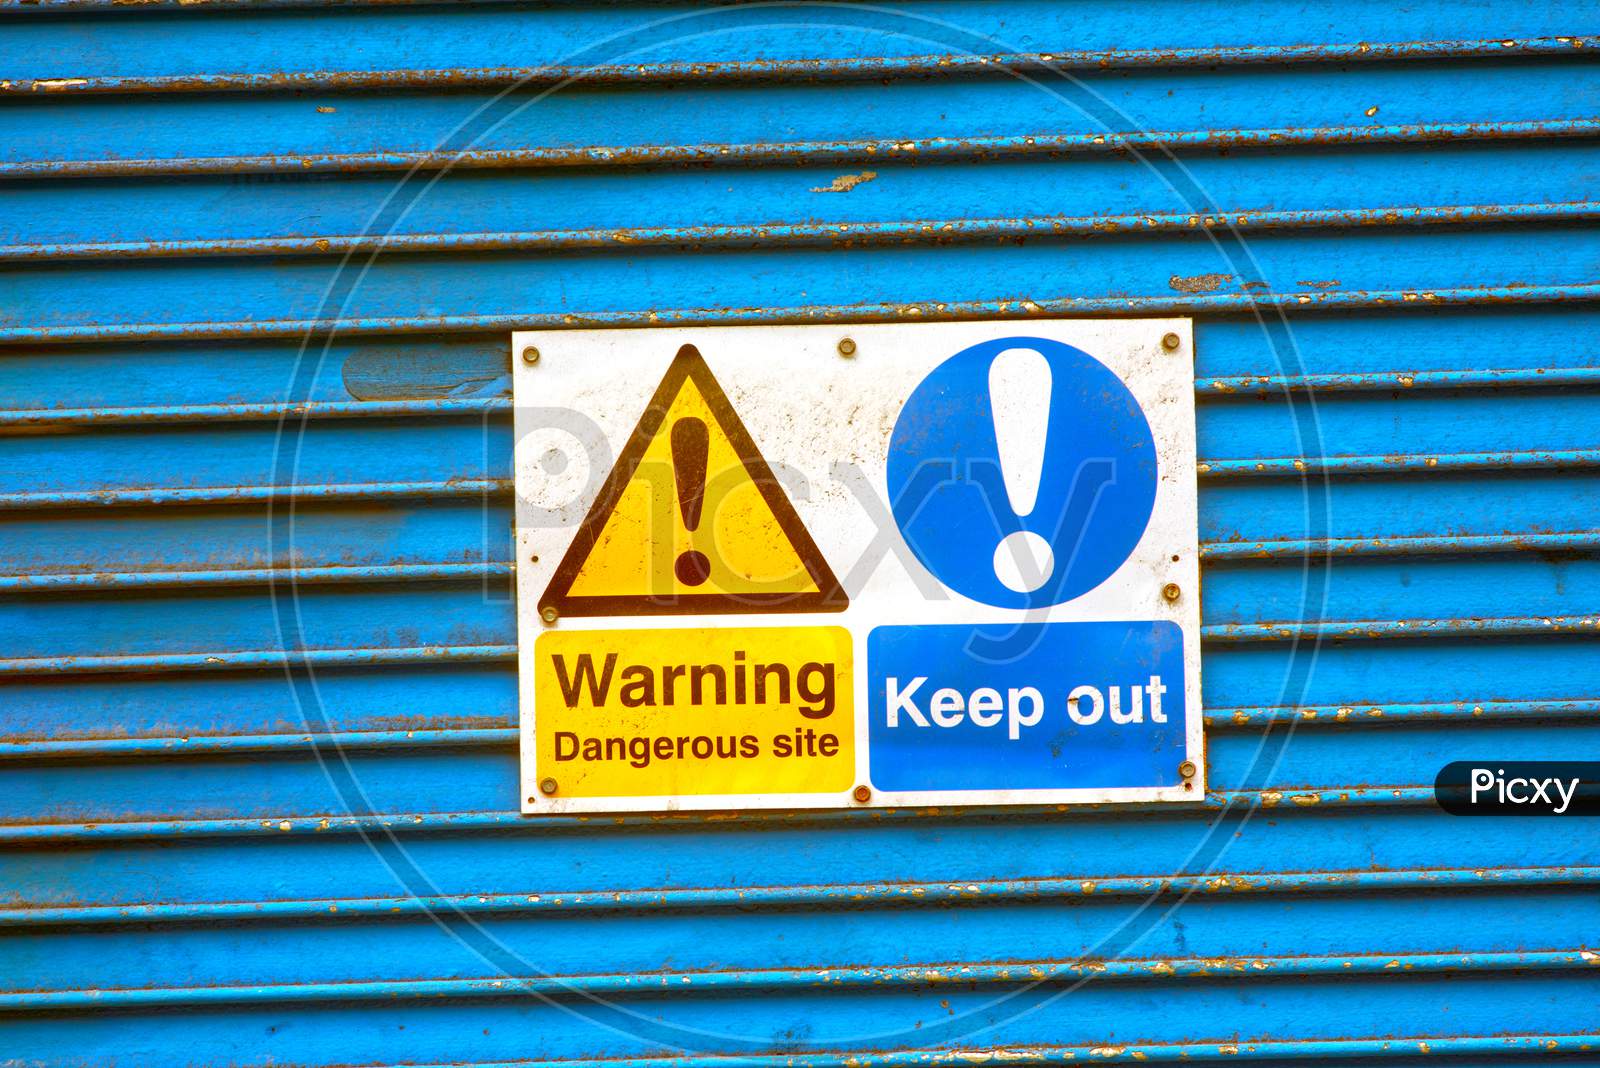 Warning notice on metal shutter doors.